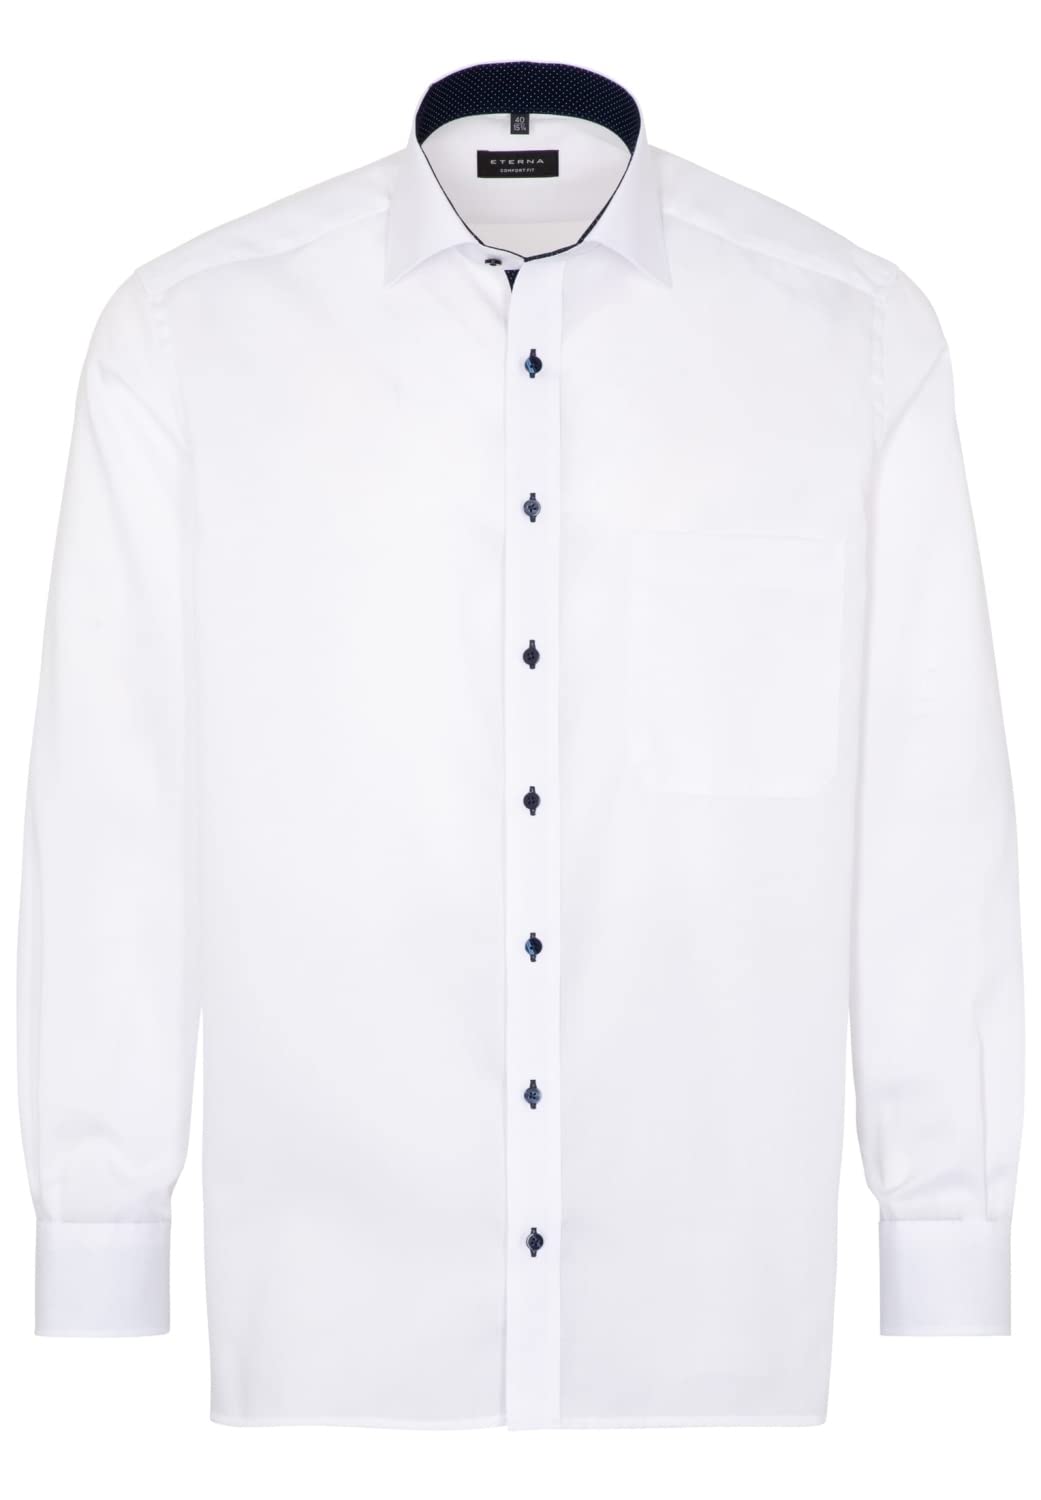 ETERNA Langarm Hemd COMFORT FIT Pinpoint unifarben mit Classic Kent Kragen- Gr. 40 EU, Weiß